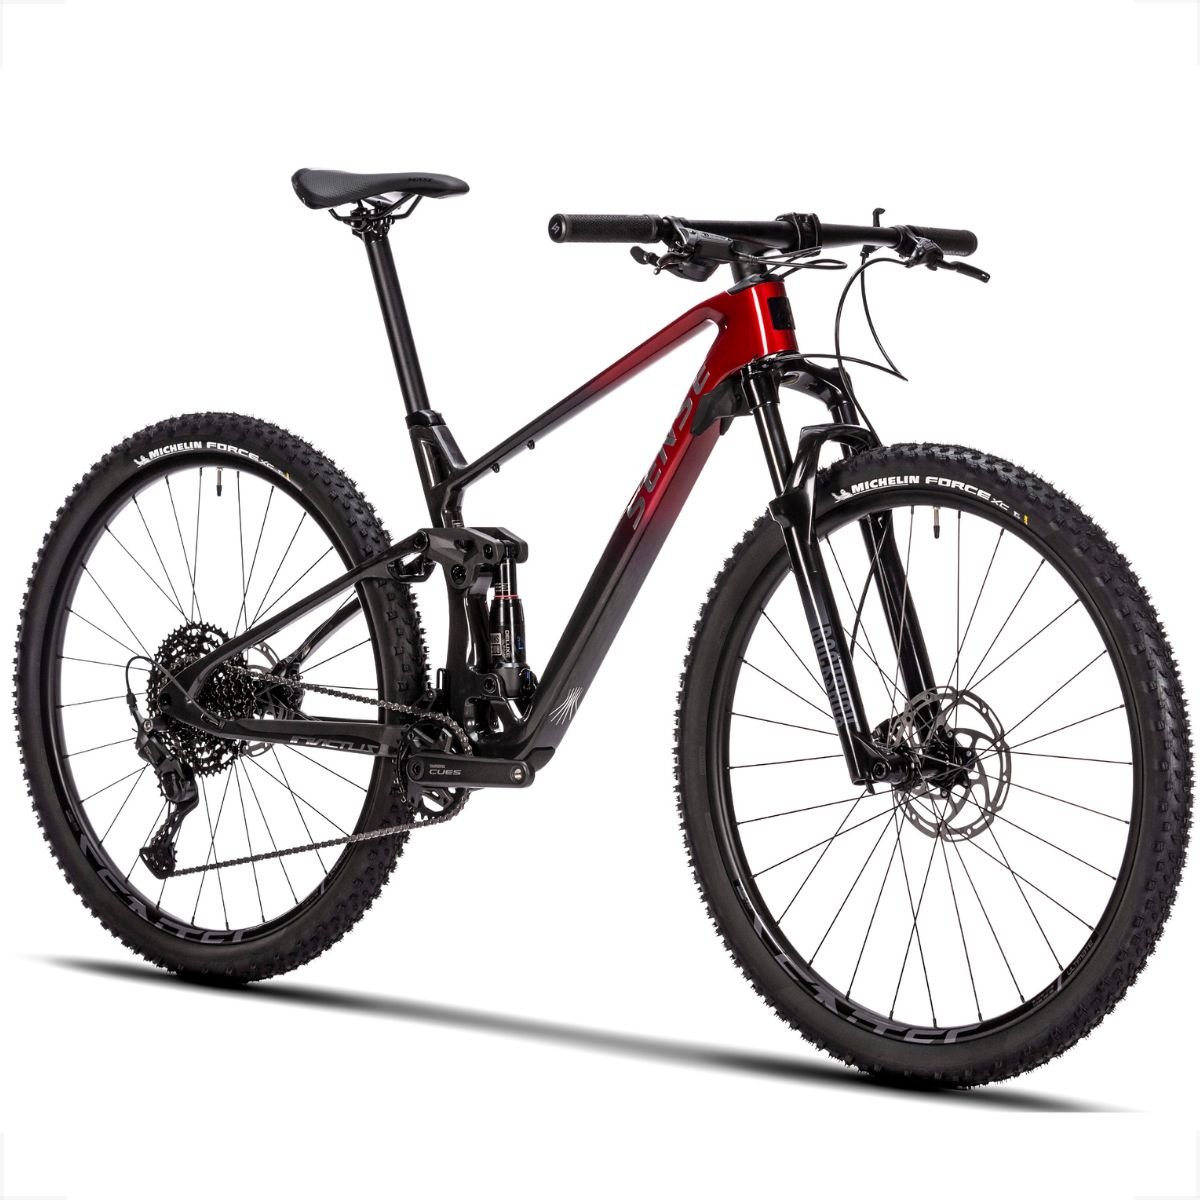 Bicicleta Full Sense Invictus Sport Carbono Shimano Cues:vermelho+preto/19